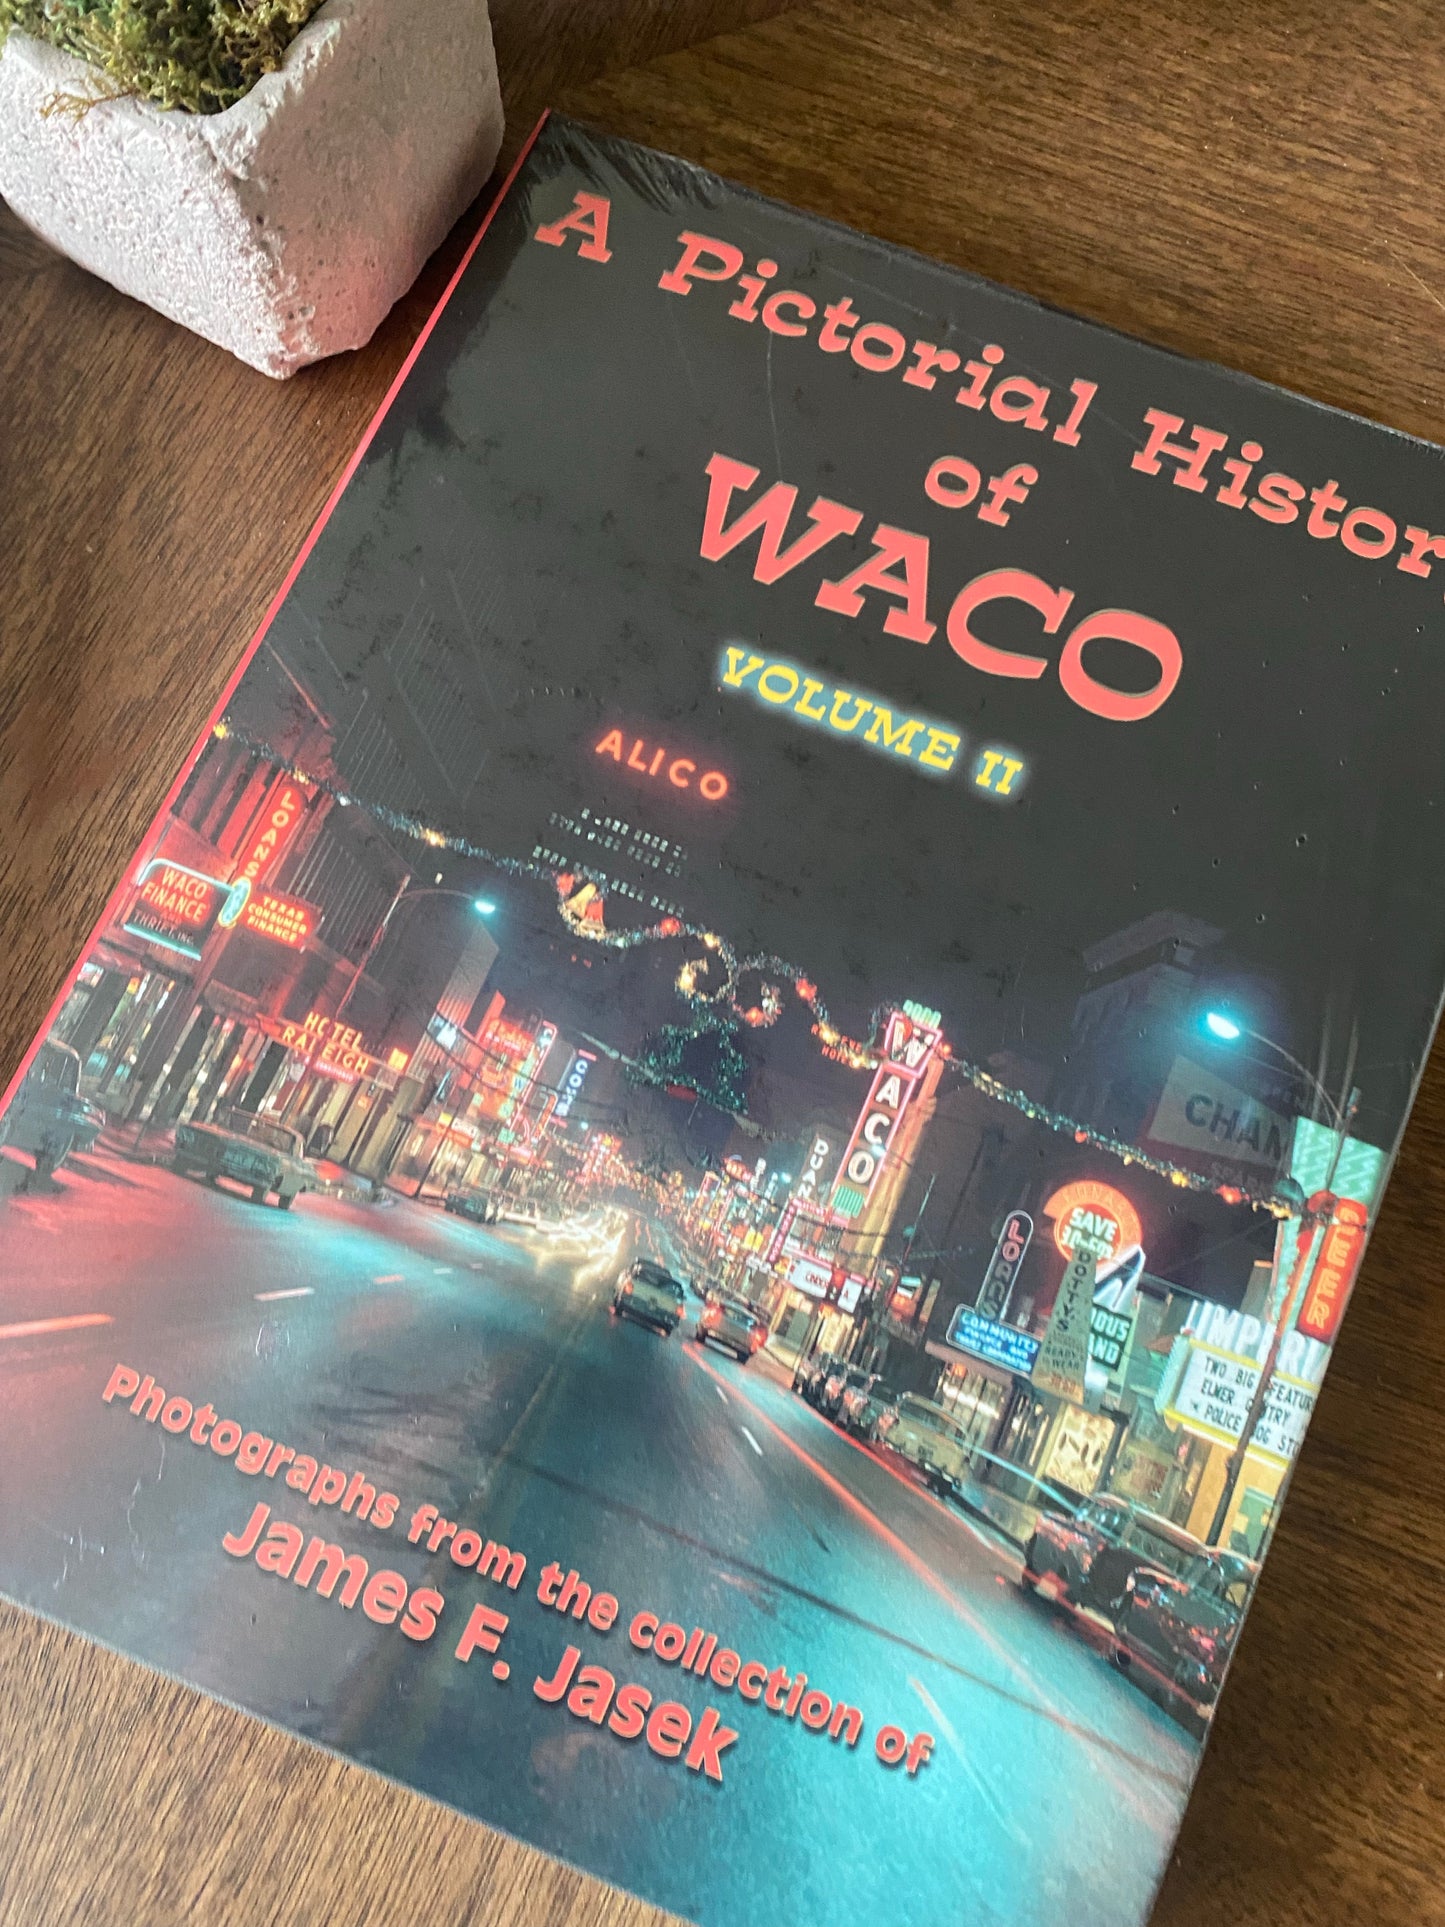 Waco history book